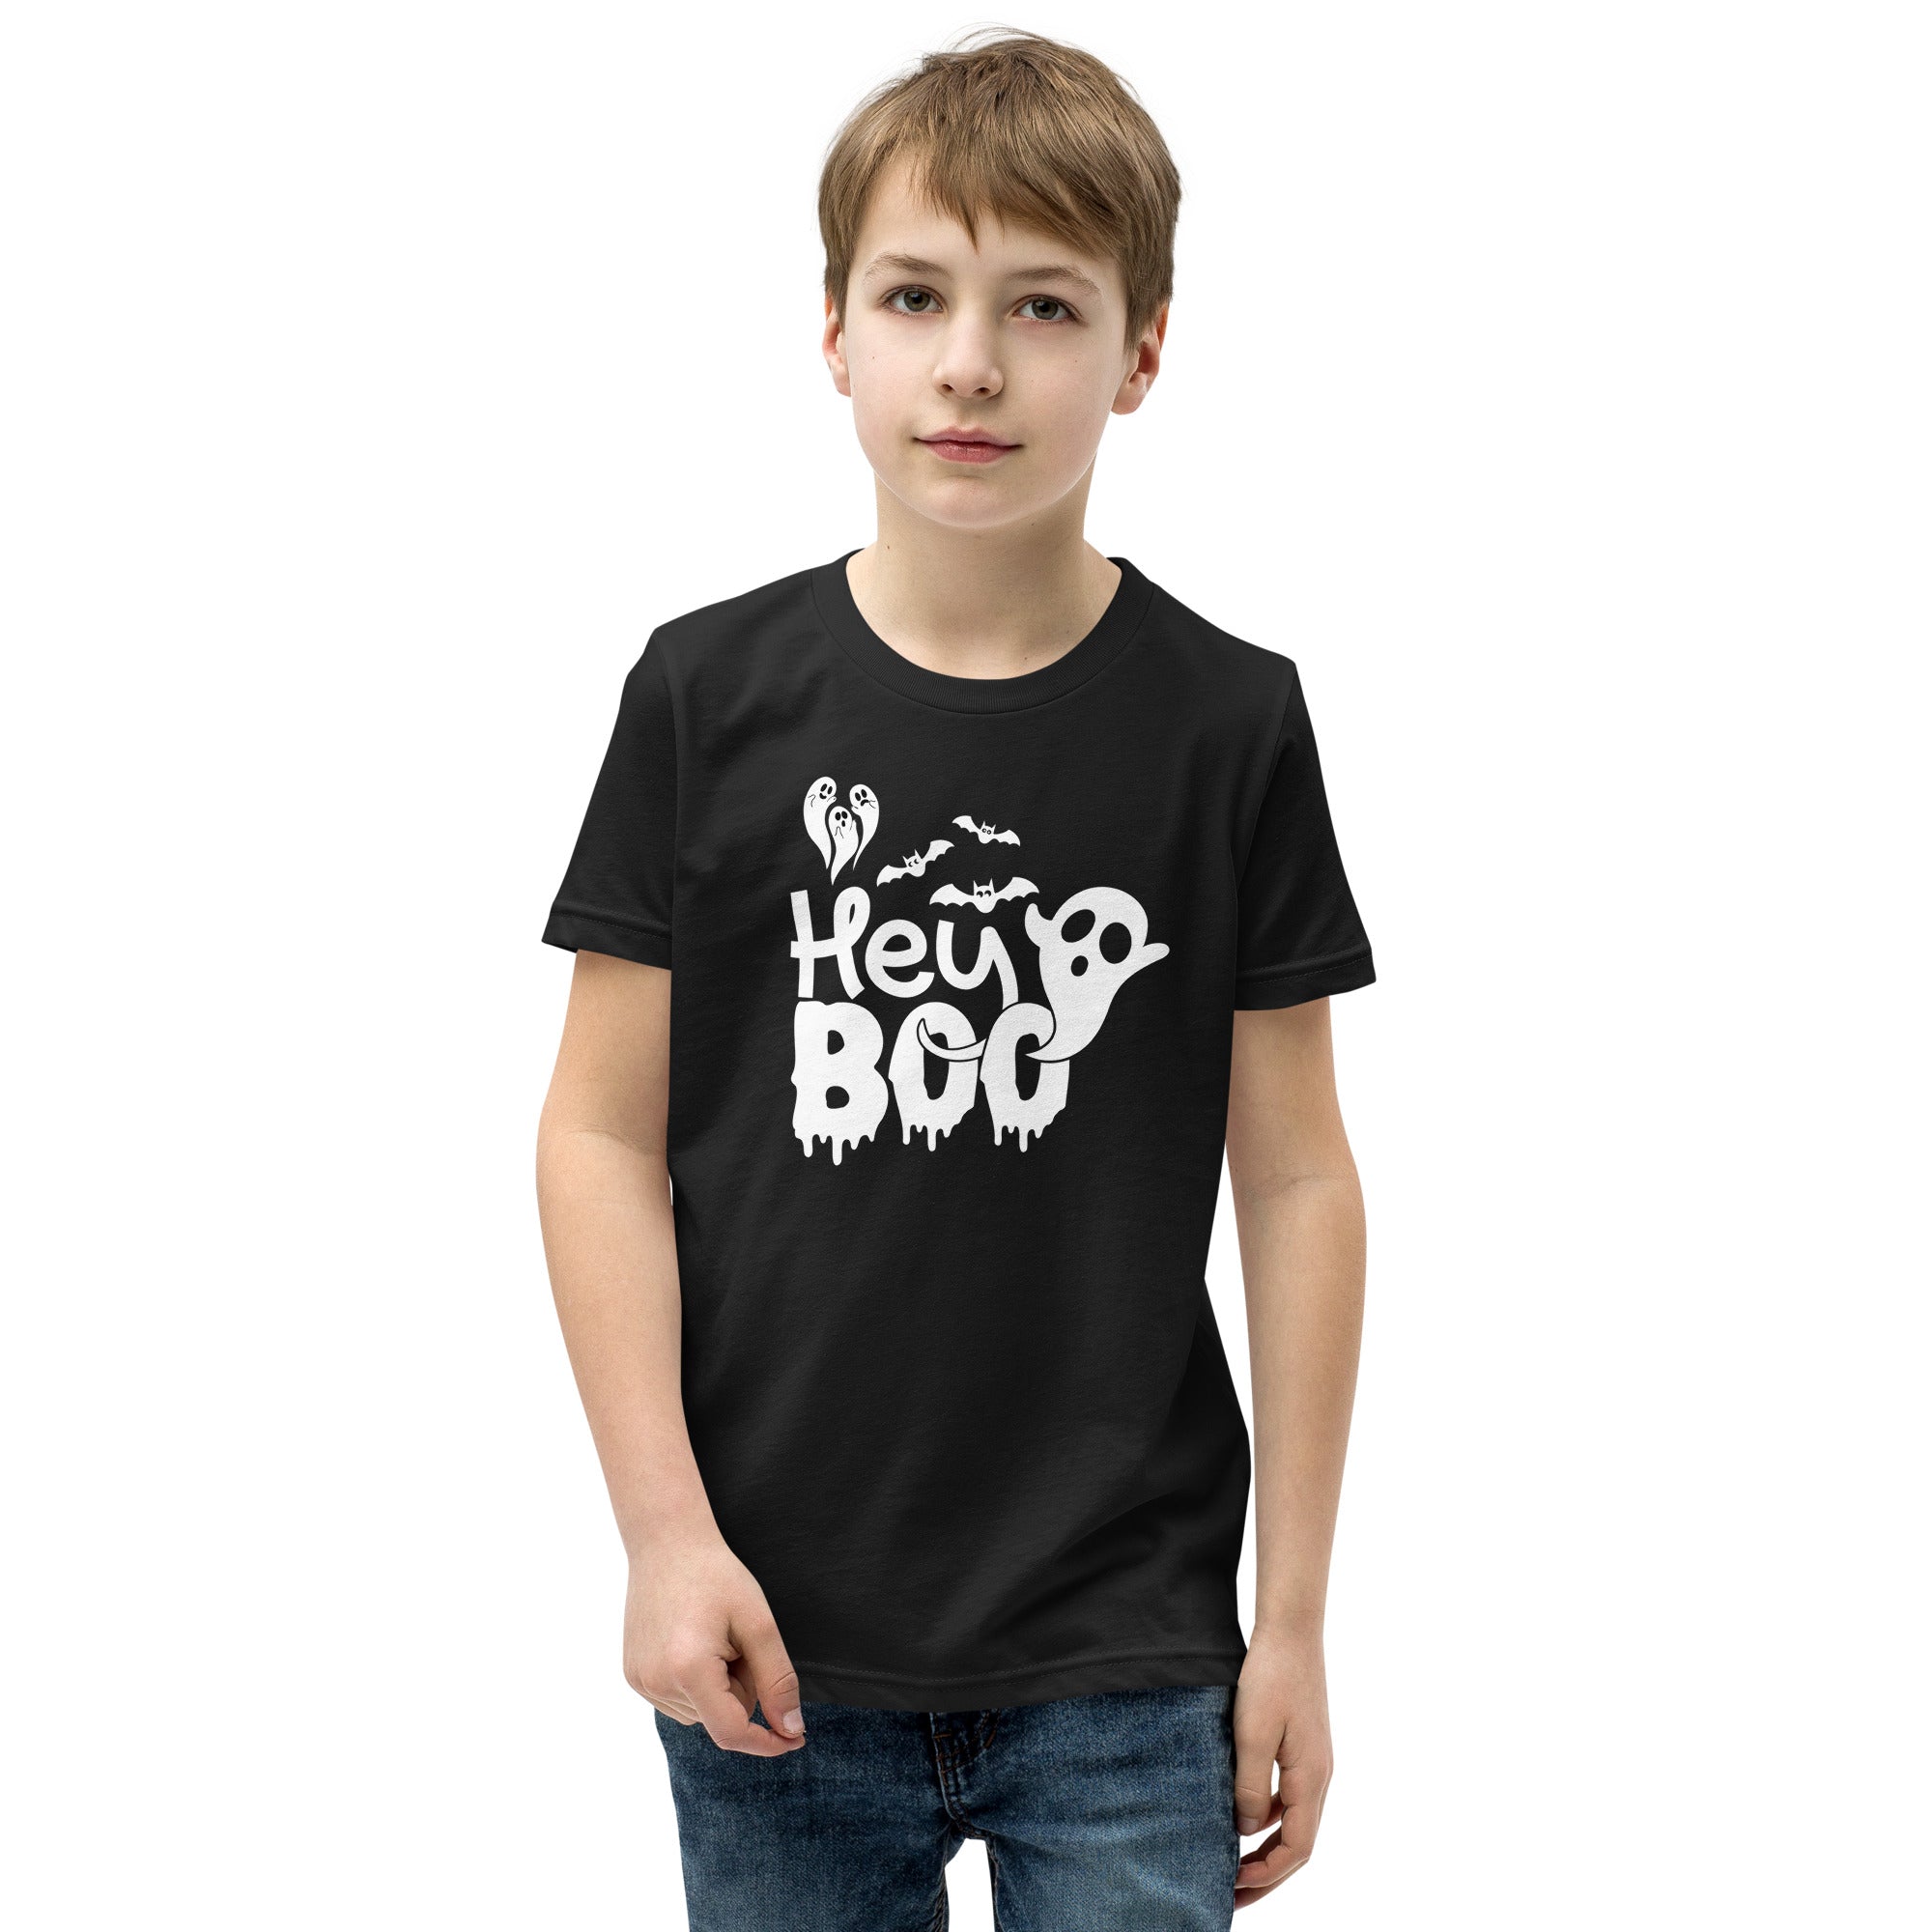 Hey Boo - Youth Short Sleeve T-Shirt